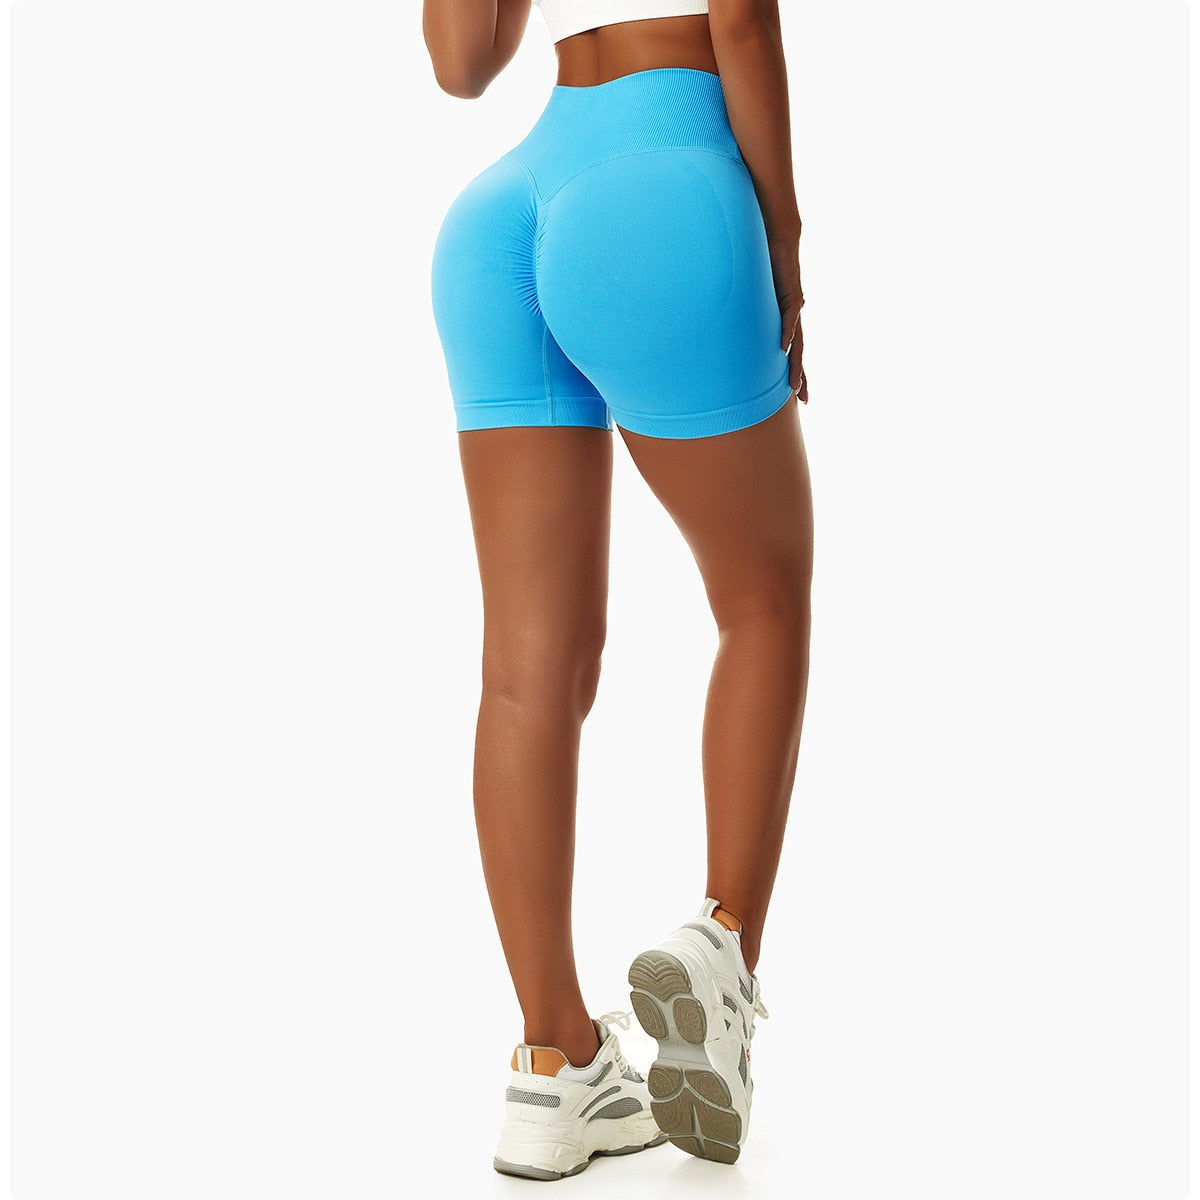 Poplin Hip Lifting Shorts Activewear Truetights Color Blue XS 